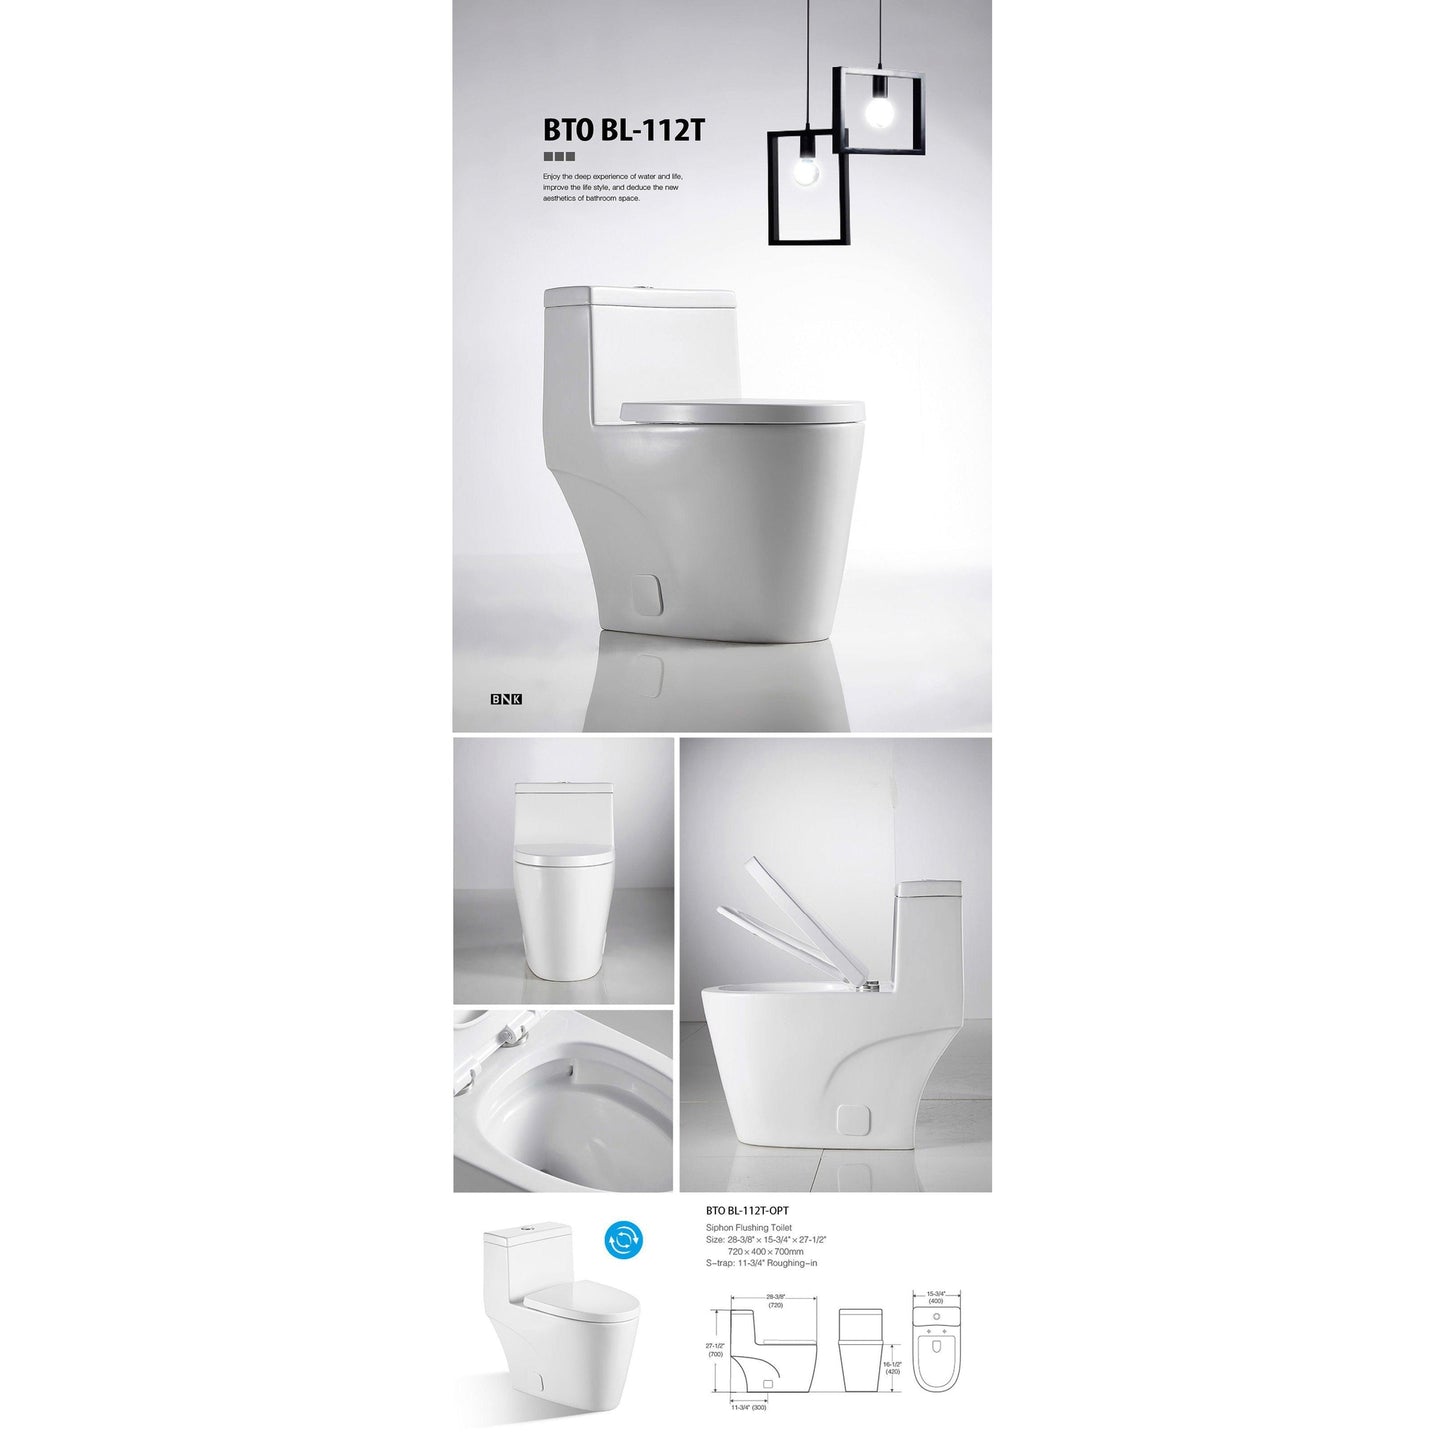 BNK BTO BL-112T Siphon Flushing Toilet